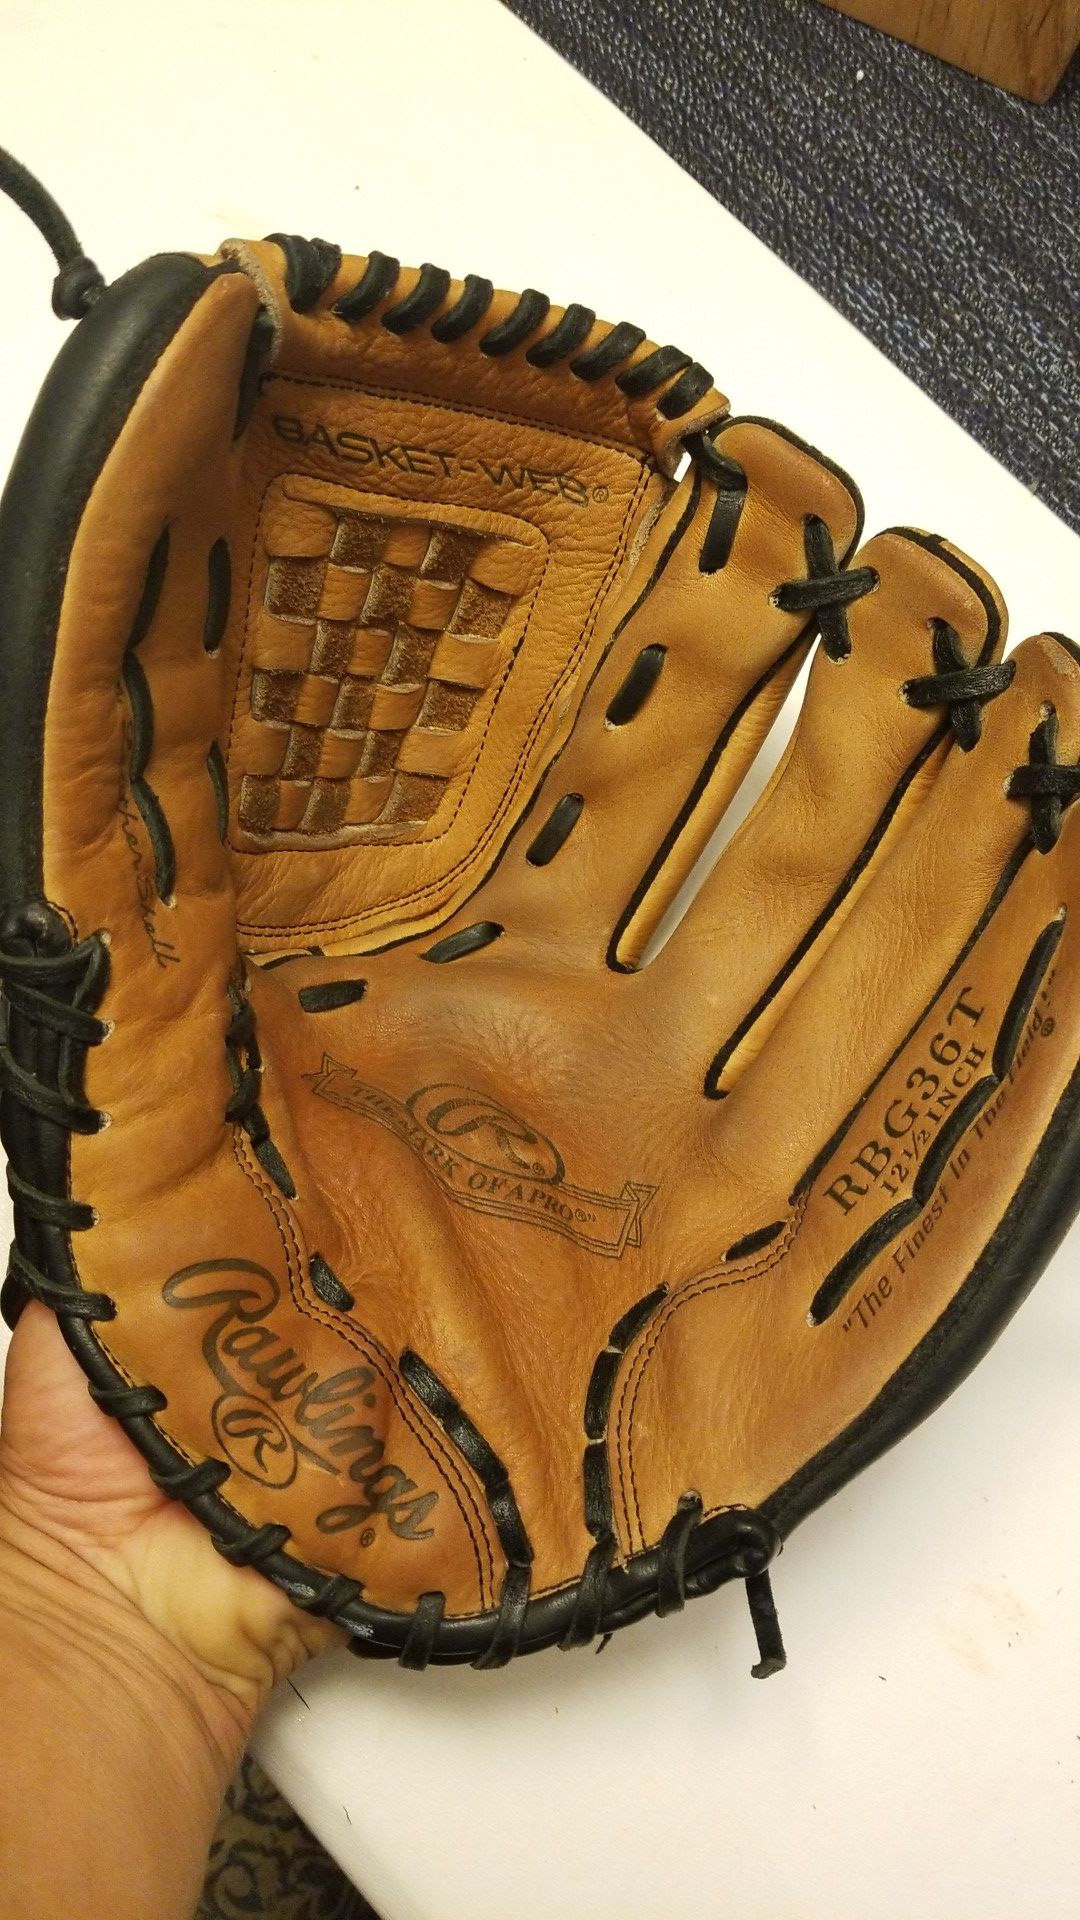 Rawlings 12 1/2 inch baseball or softball glove